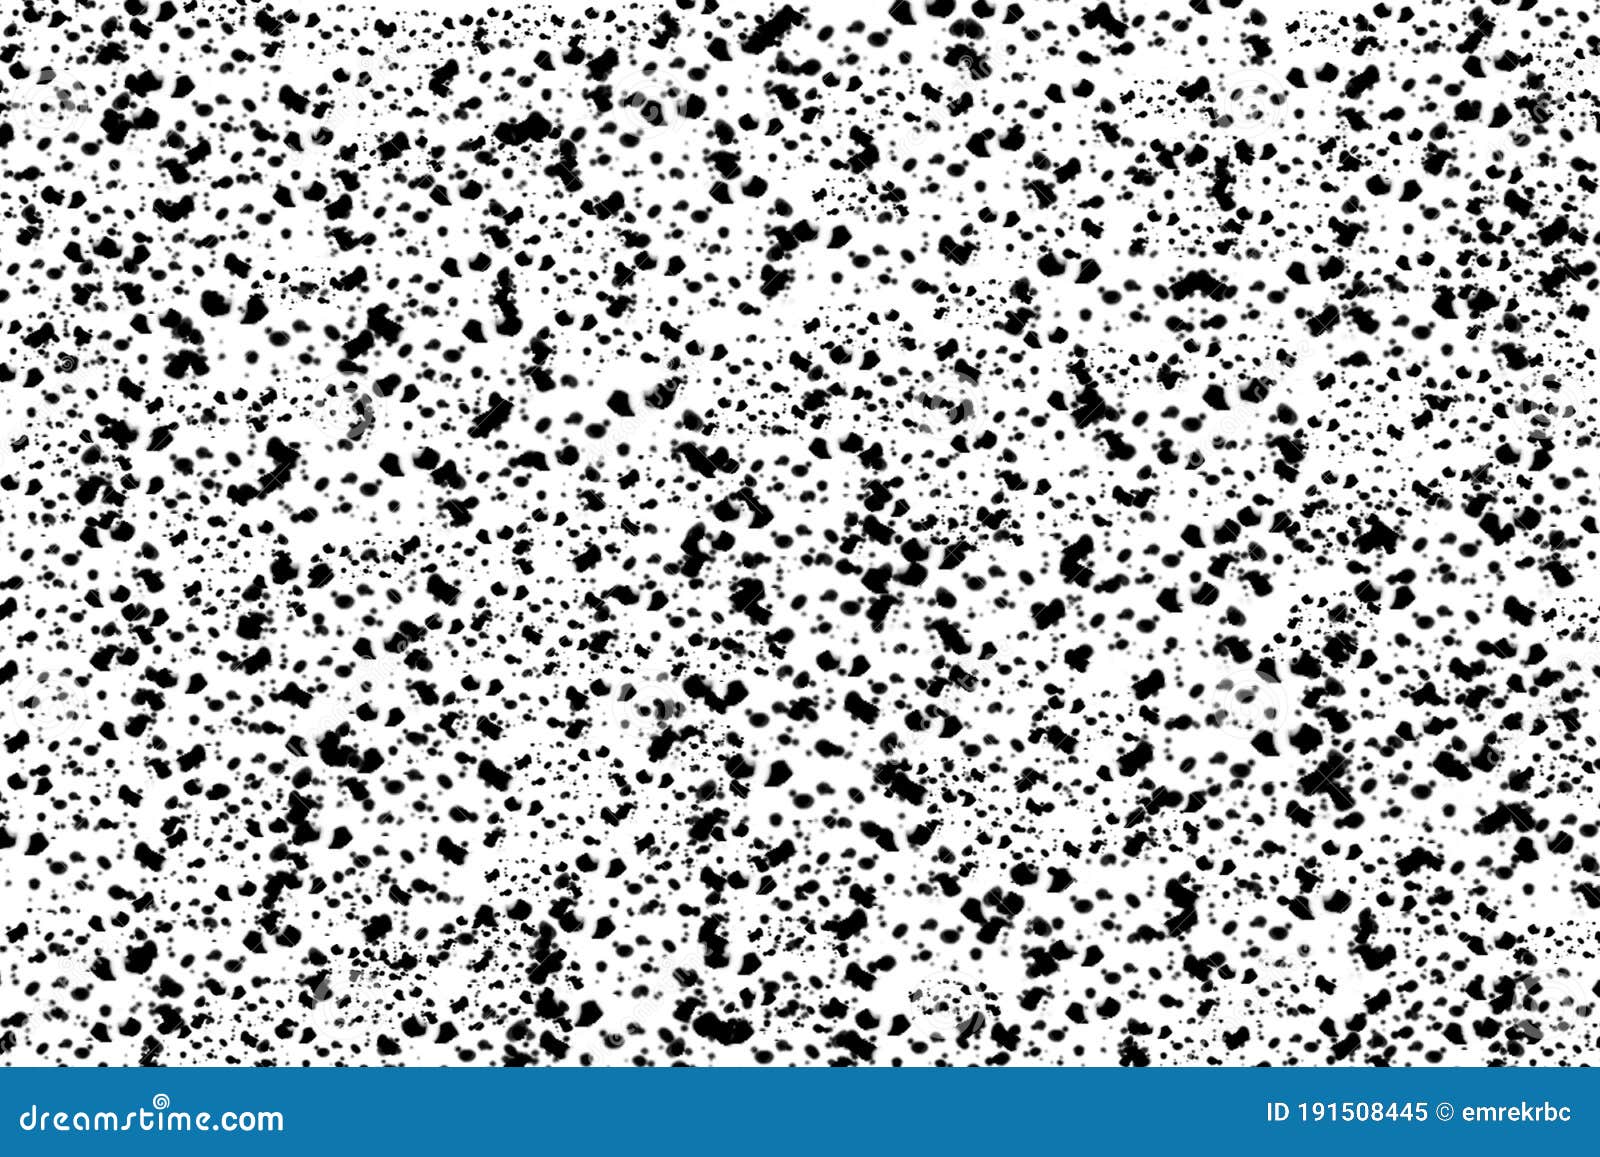 Black White Dalmatian Pattern Grunge Background Texture Stock Image